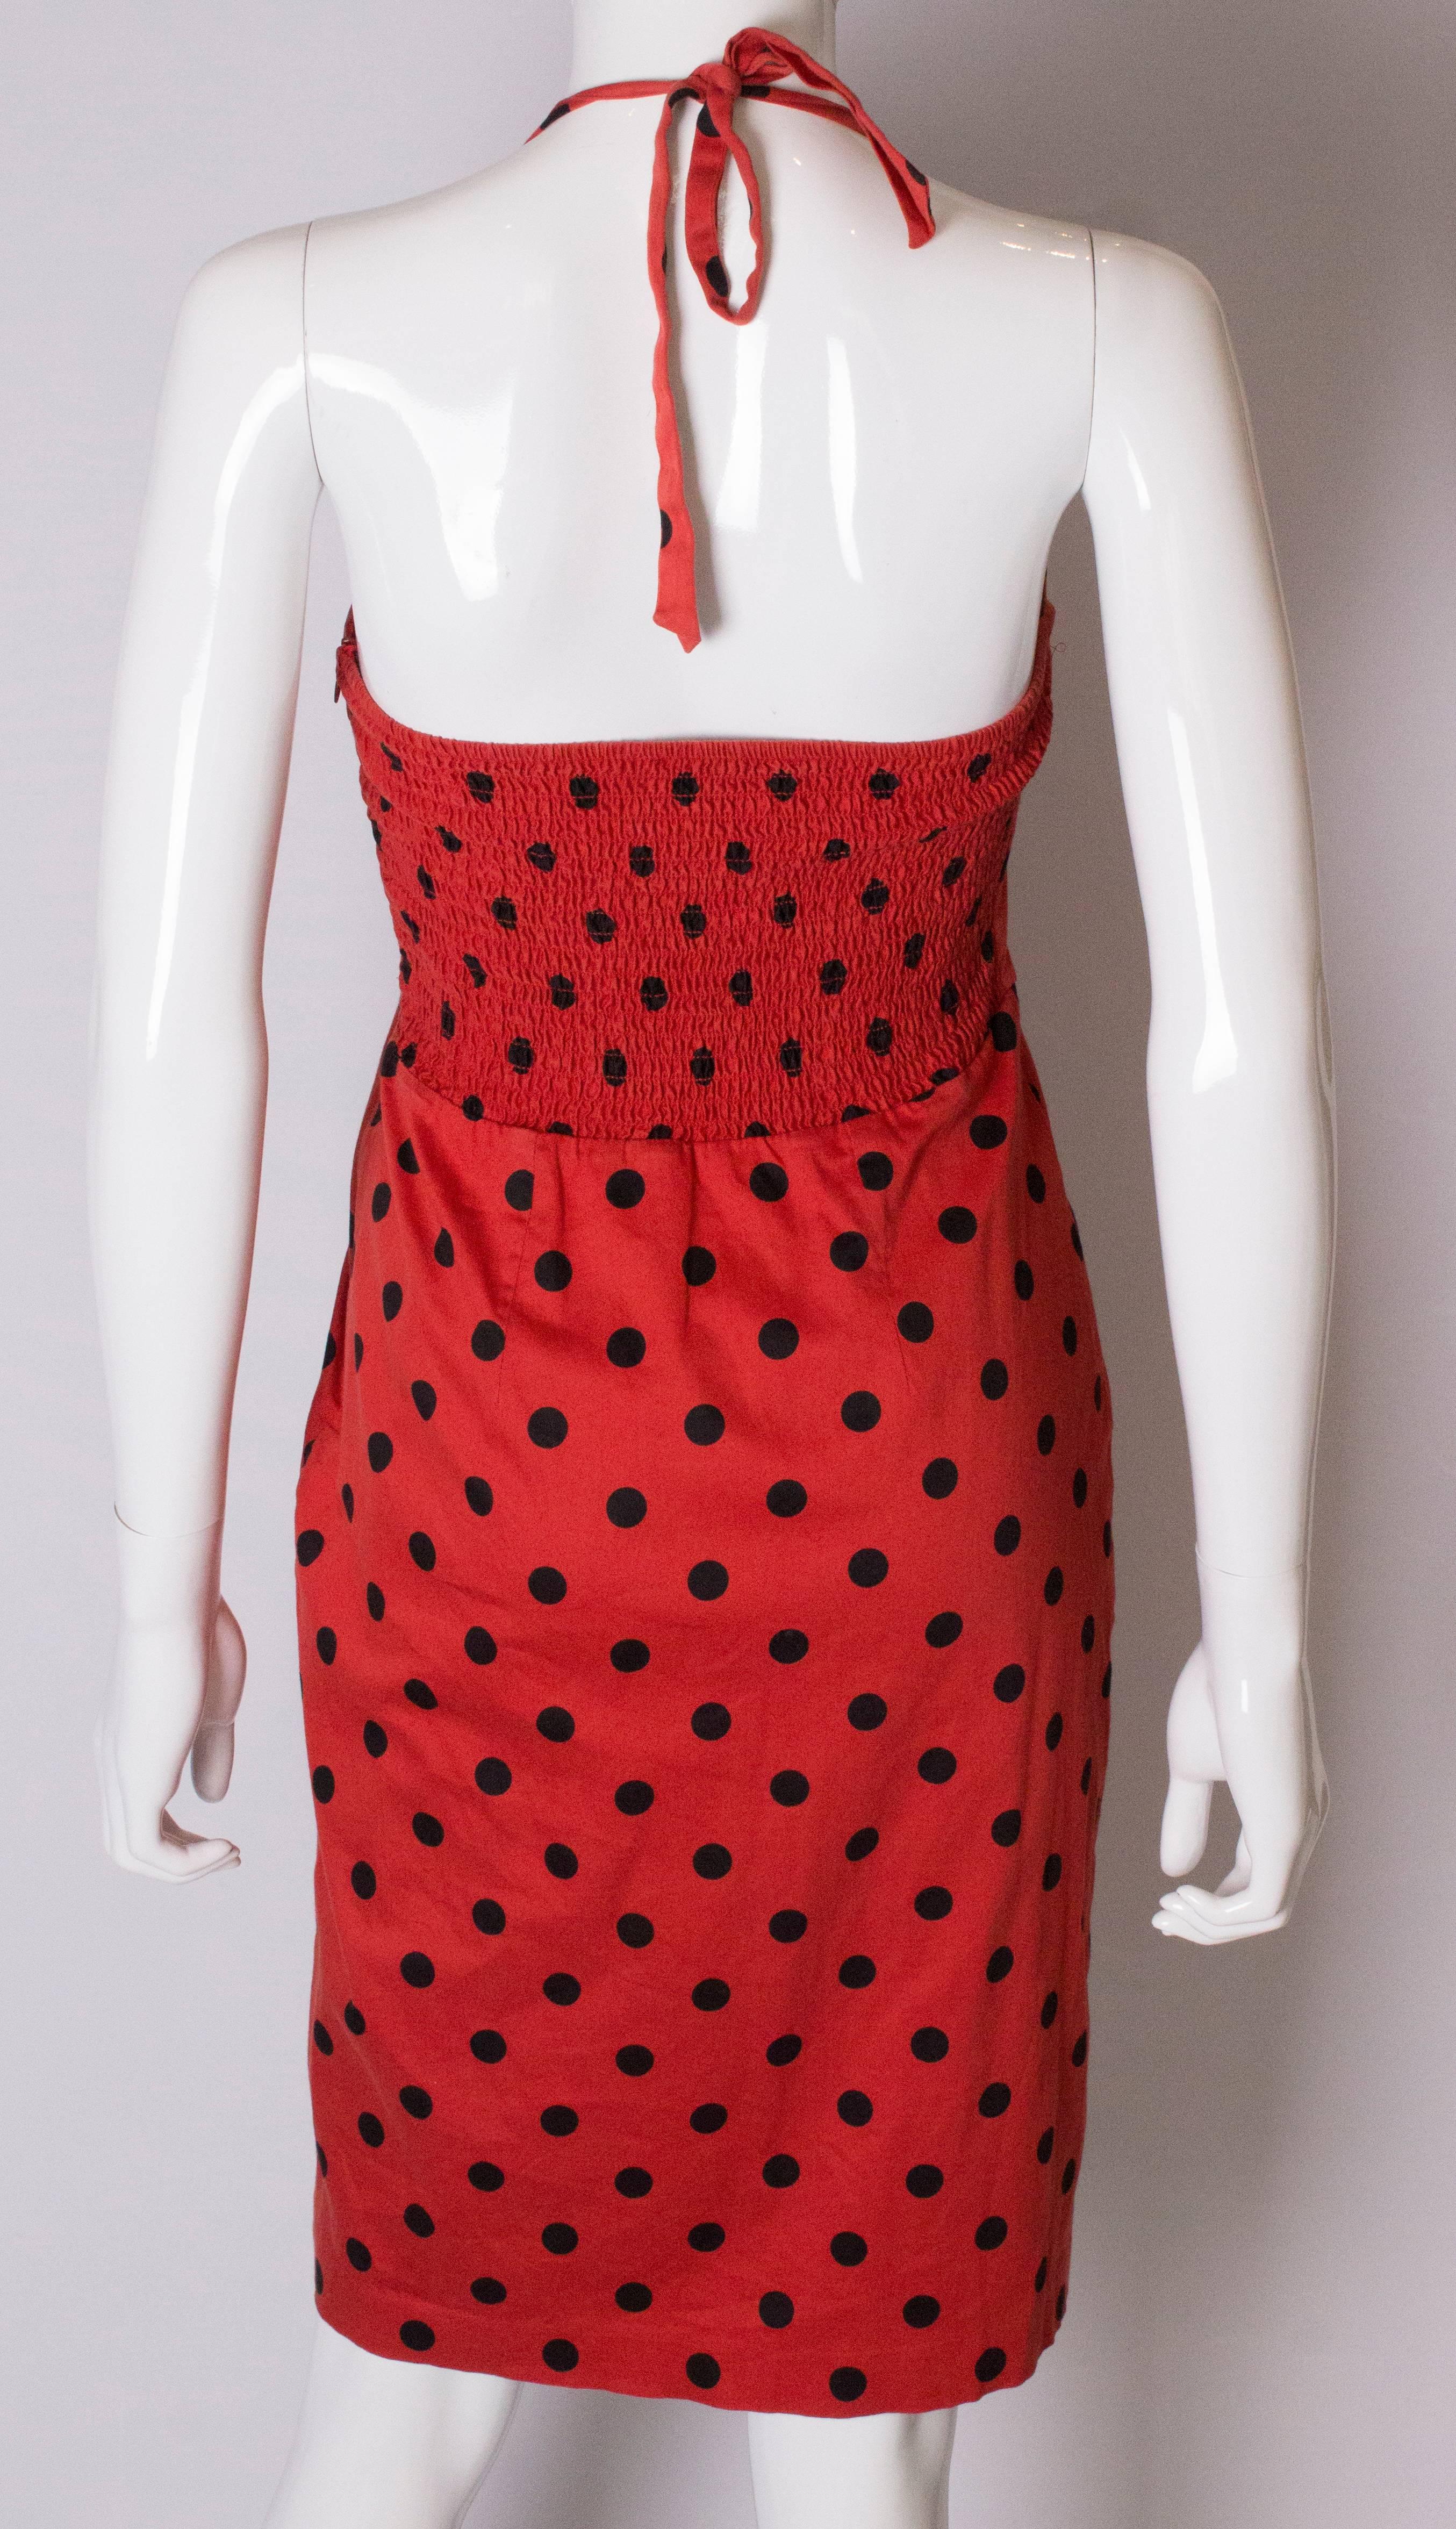 Women's A Vintage 1950s style halter neck Polka Dot Dress by Betsey Johnson 